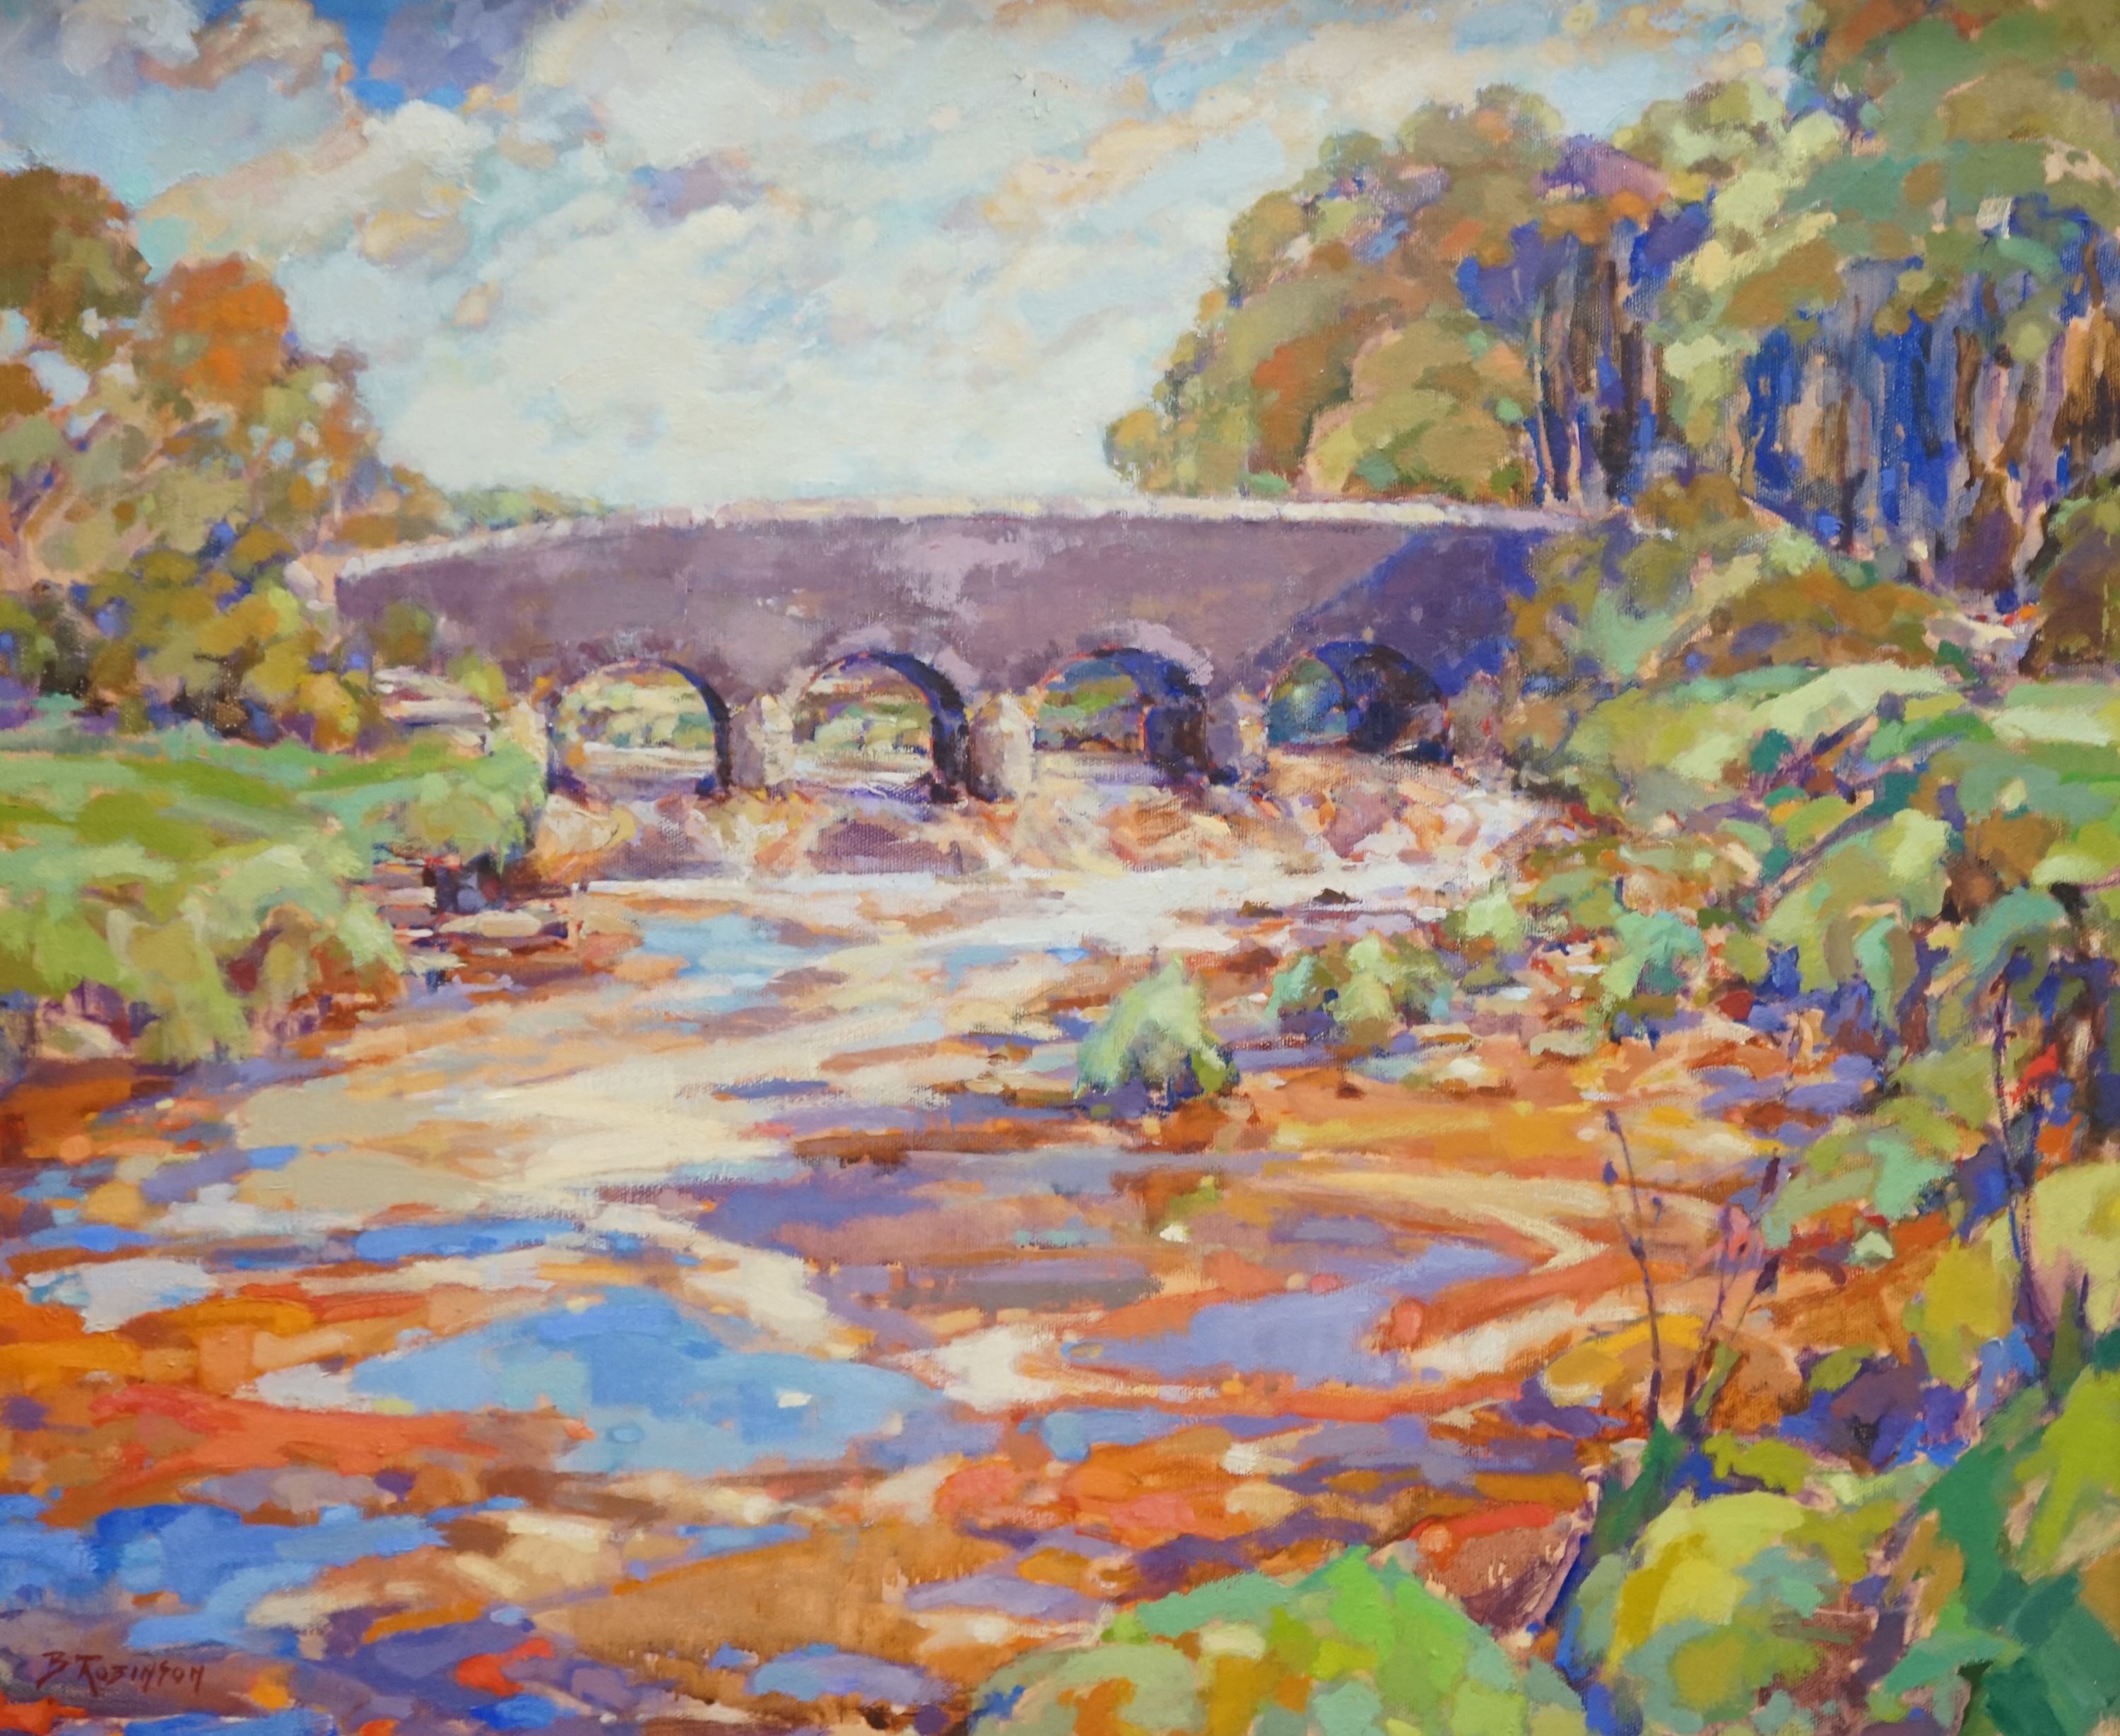 B, Robinson, oil on canvas, 'The Bridge, Ruan Lanihorn', signed, 50 x 60cm